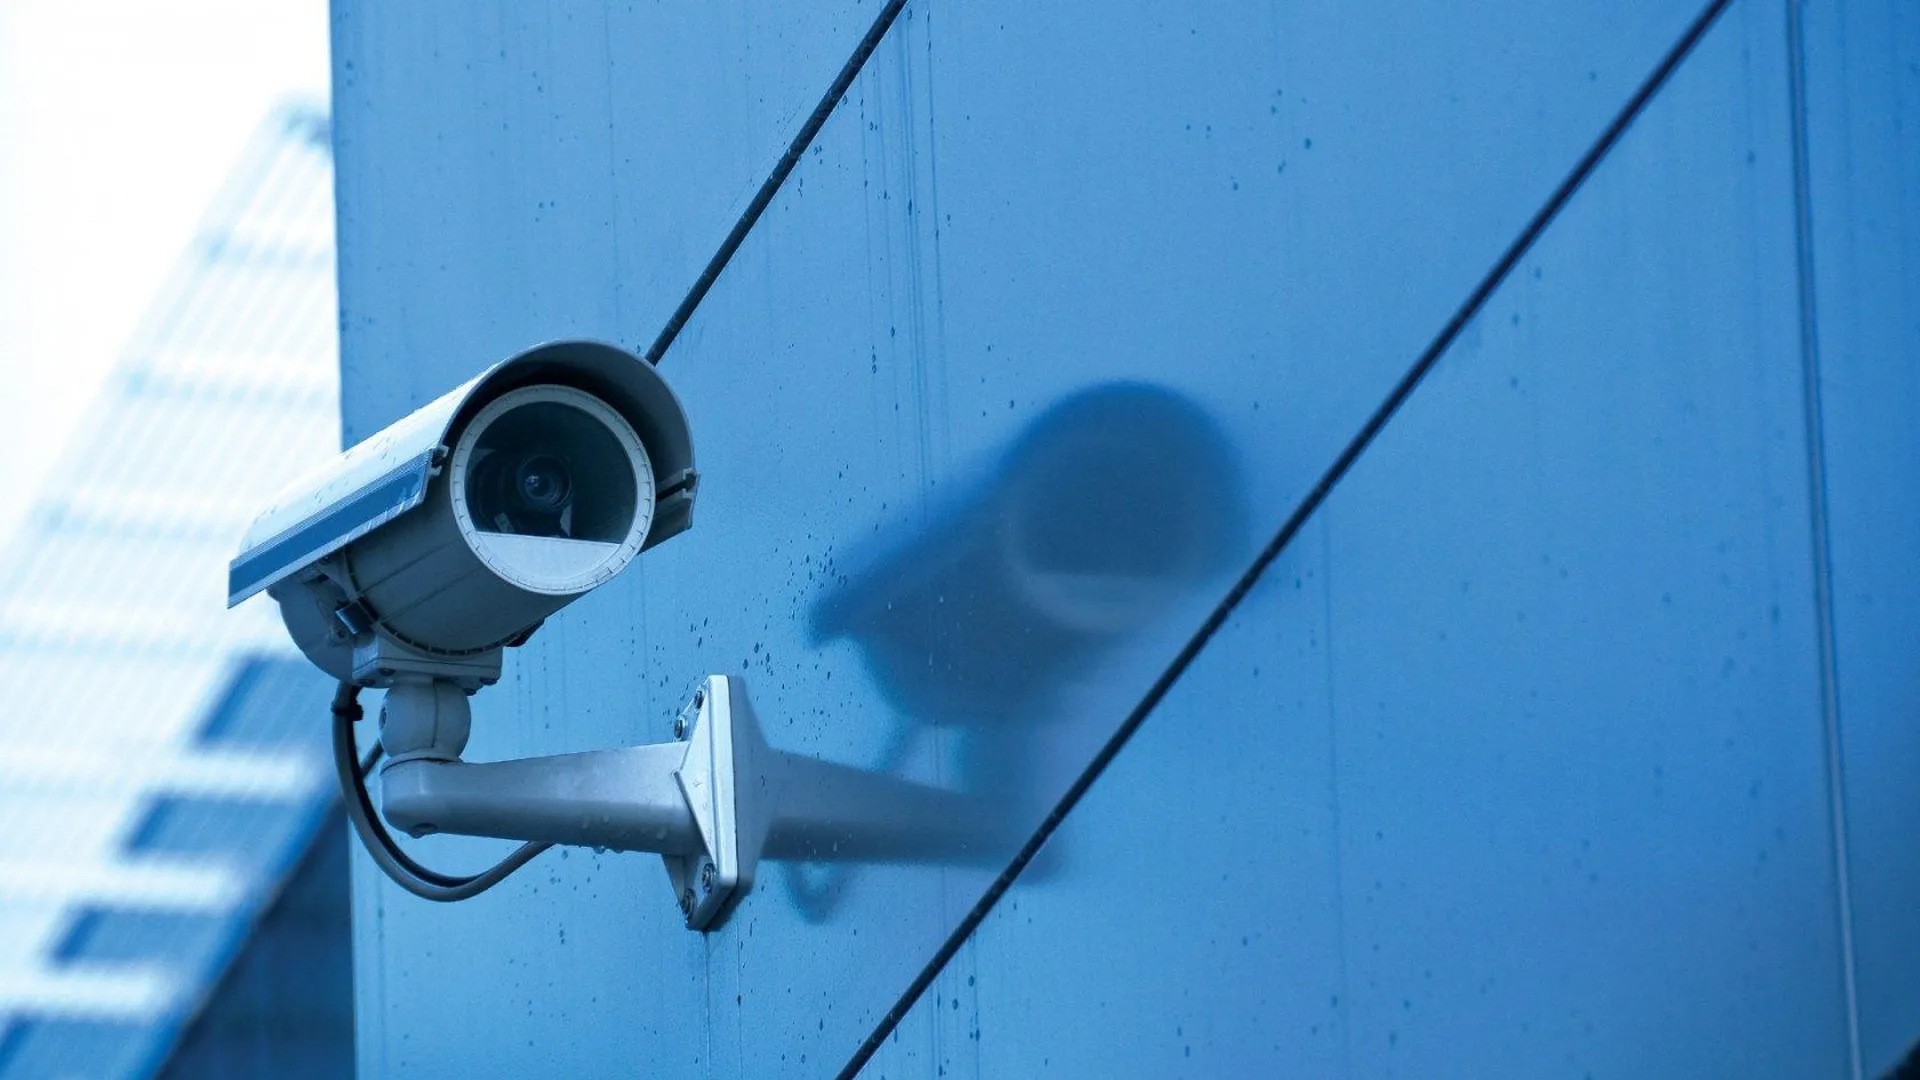 Порядка 5,5 тыс камер видеонаблюдения установят в подъездах Люберец до конца 2022 года